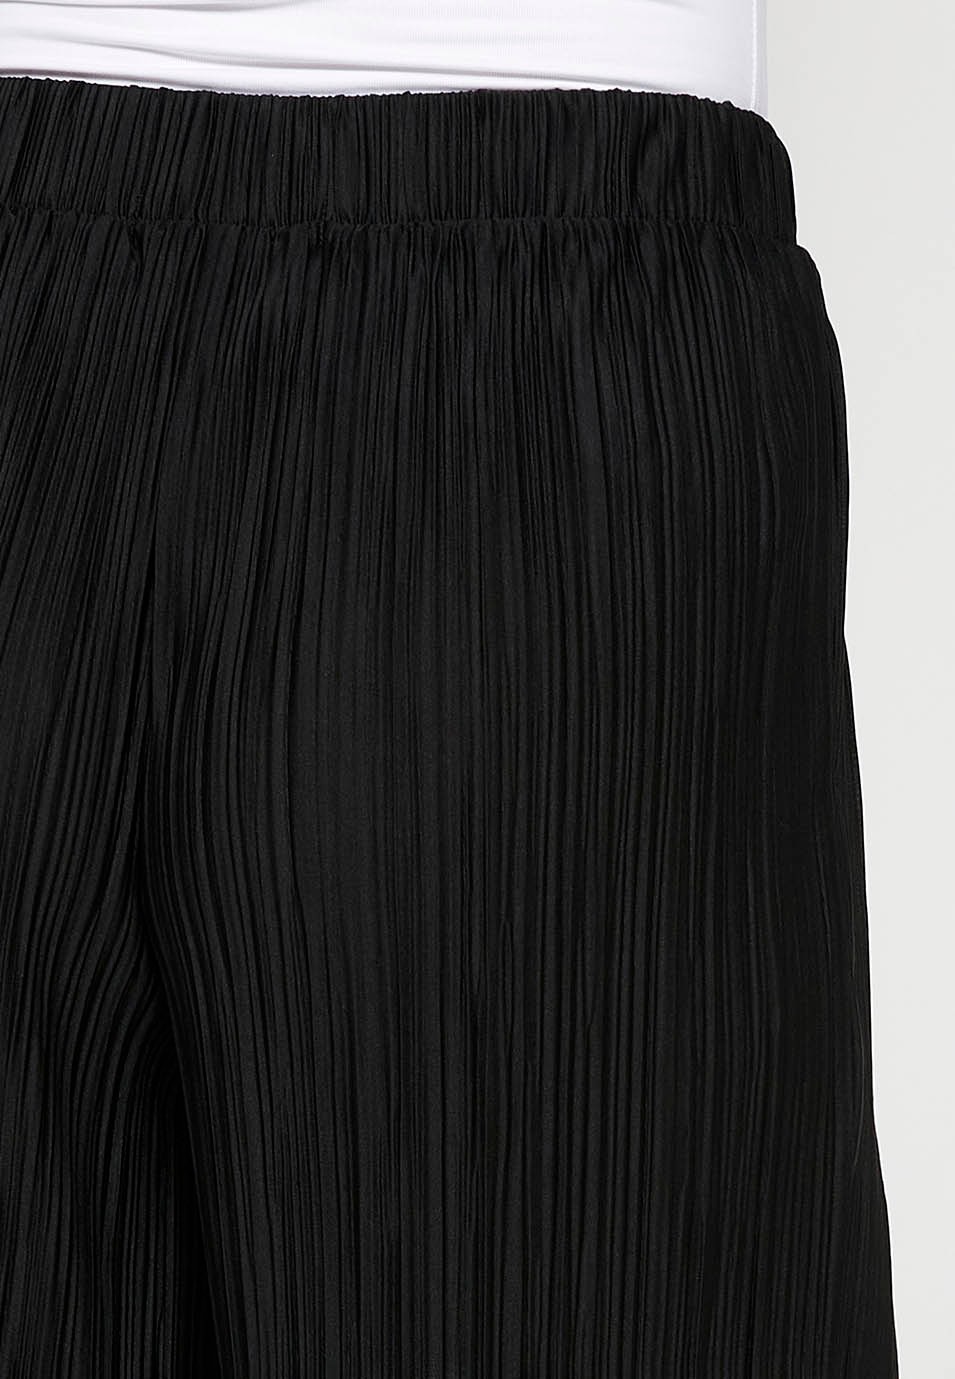 Pantalón largo ligero, cintura engomada, tela plisada color negro para mujer